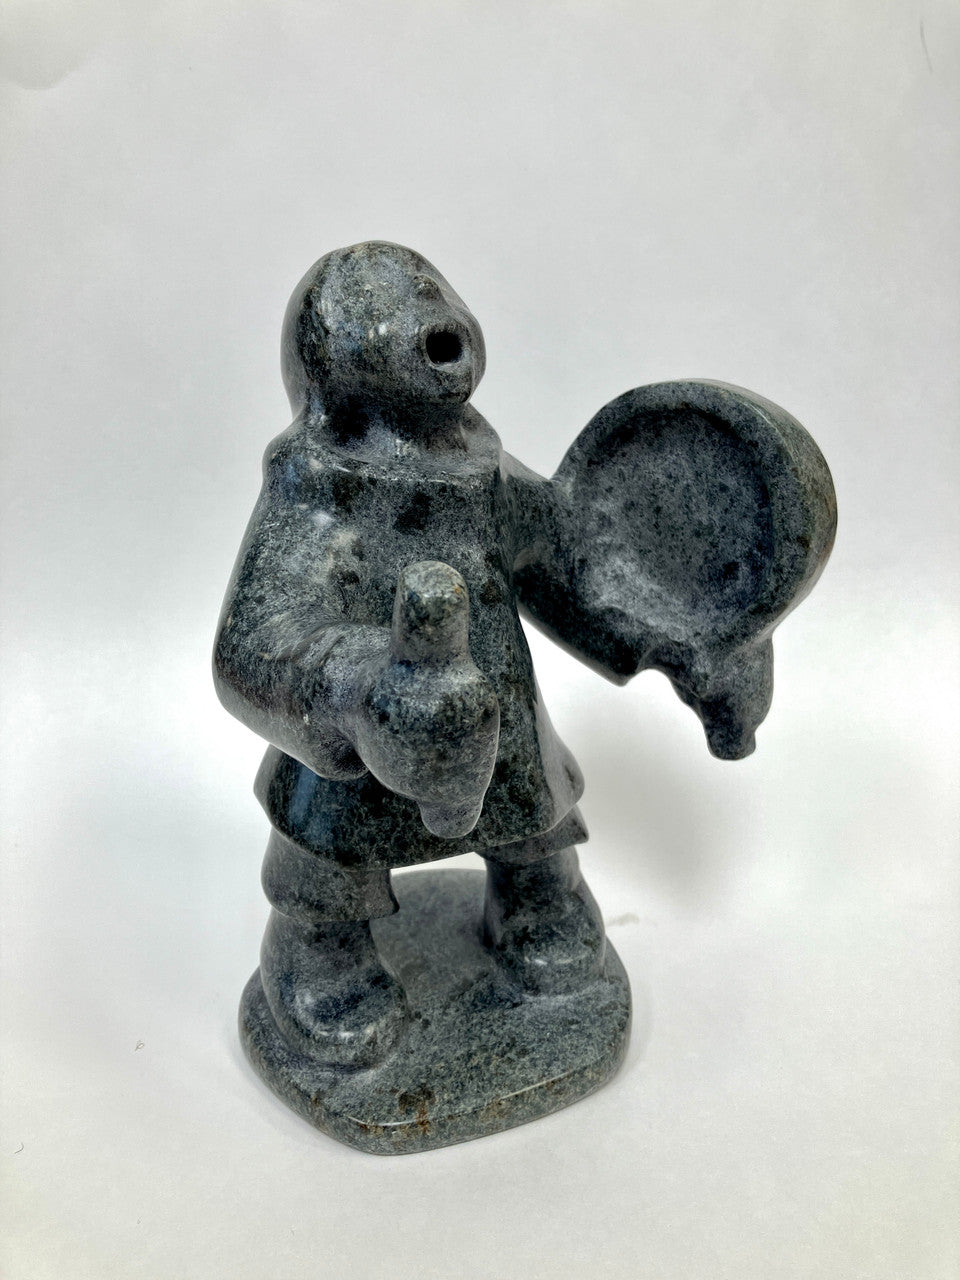 Soapstone Sculpture, Inuit, Drum Singer, Pitsulak Pinguatuk, Kangiqsujuaq, Nunavik, Hand Carved